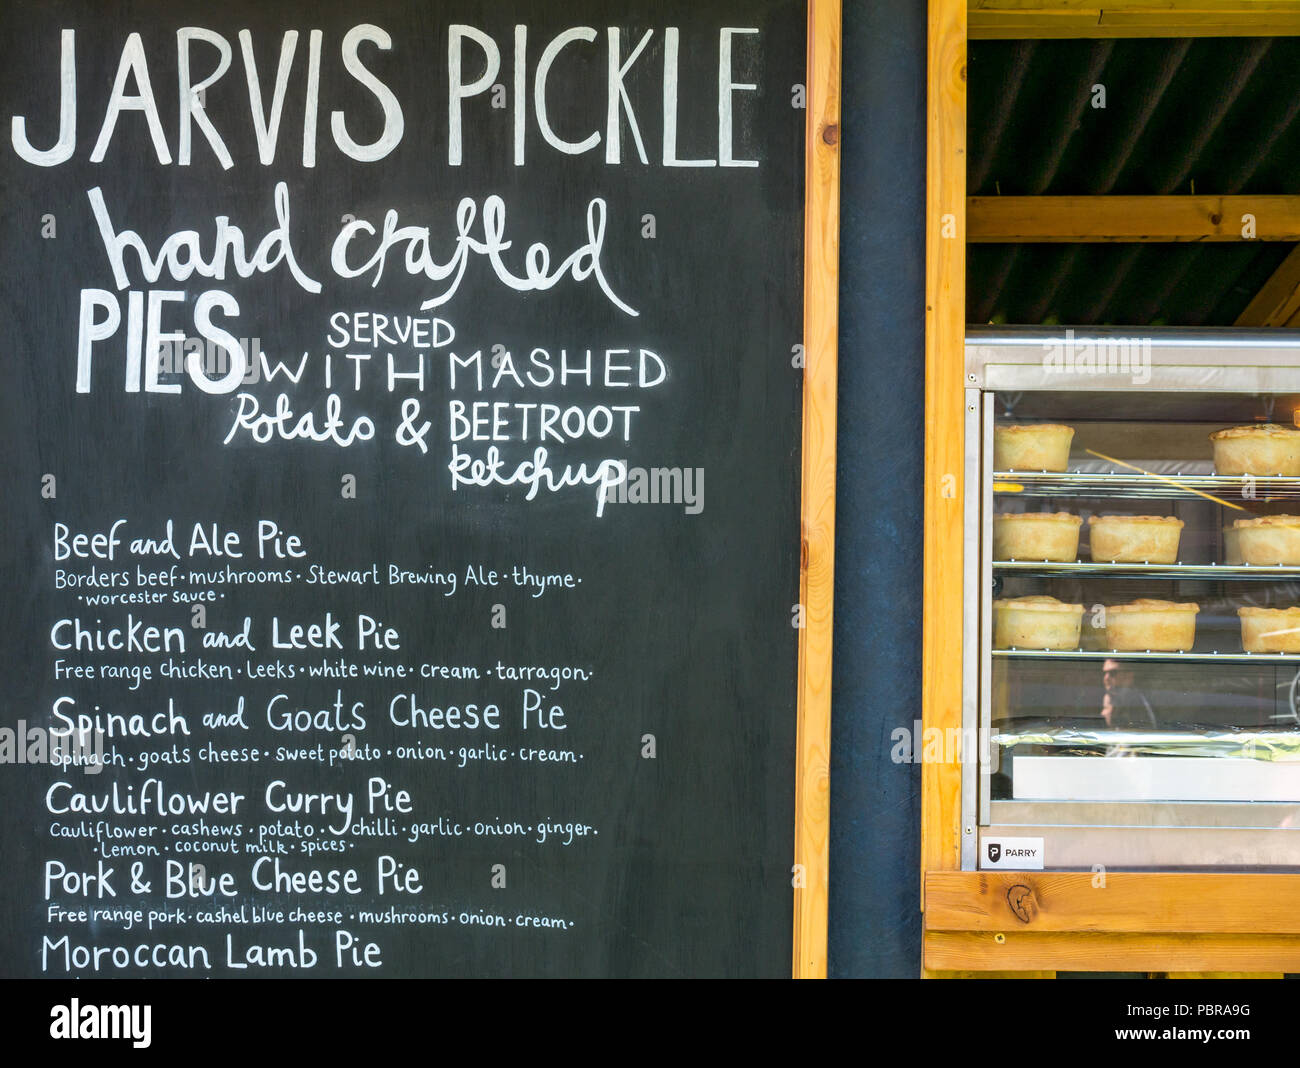 Edinburgh Food Festival 2018  Jarvis Pickle Pies stall and menu board, George Square Gardens, Edinburgh, Scotland, UK Stock Photo